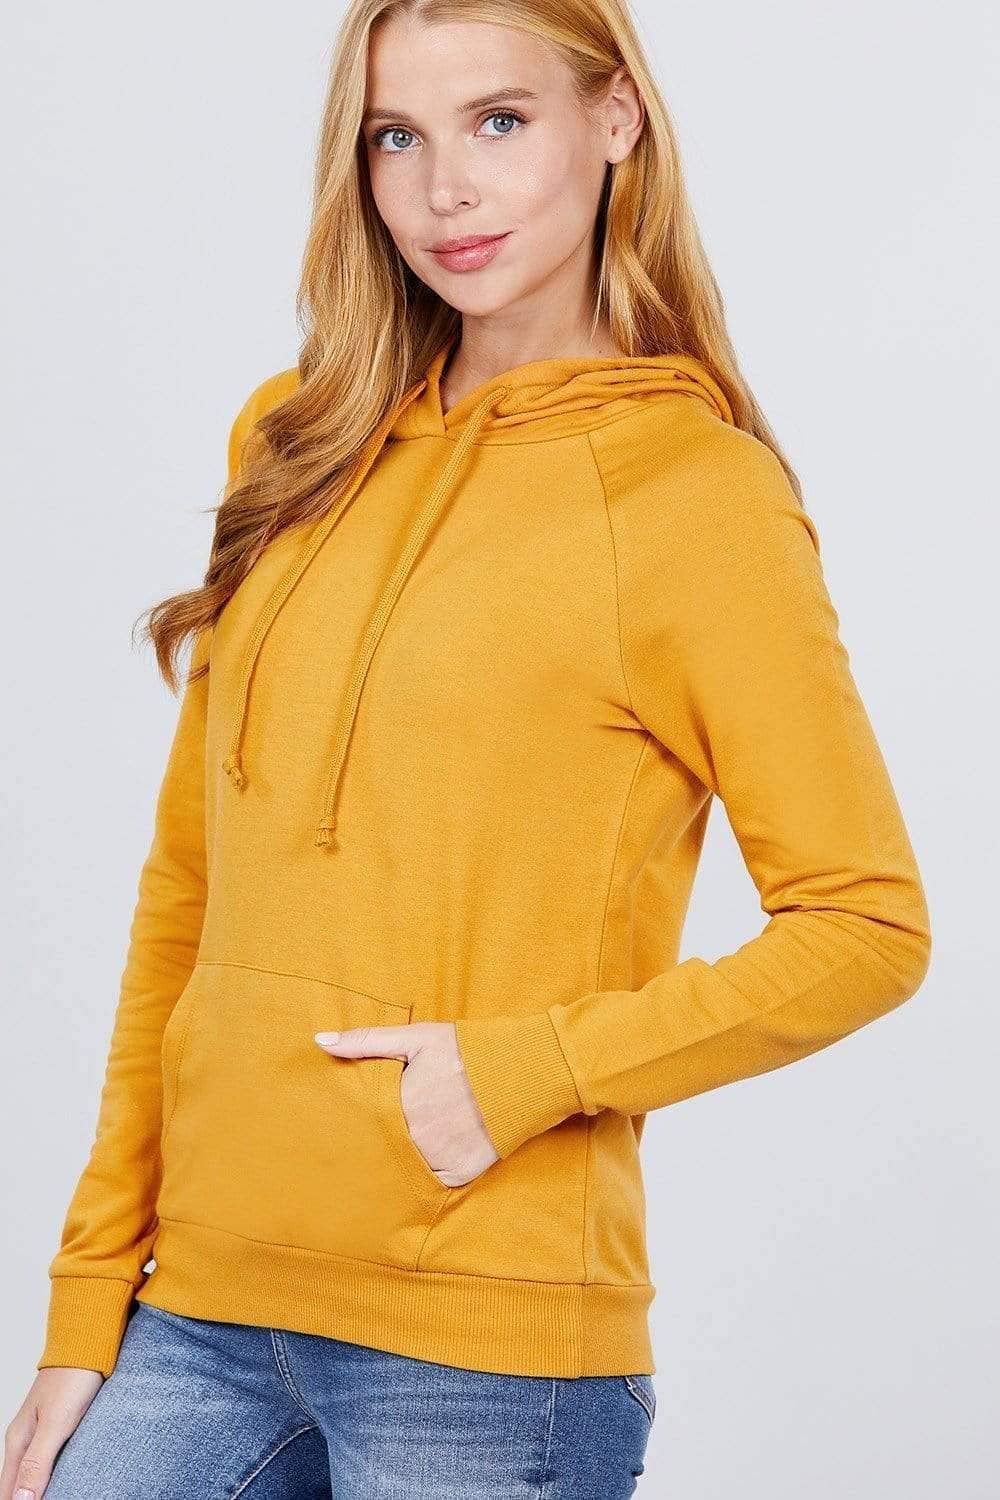 Mustard French Terry Long Sleeve Sweatshirt - Shopping Therapy, LLC Sweatshirt